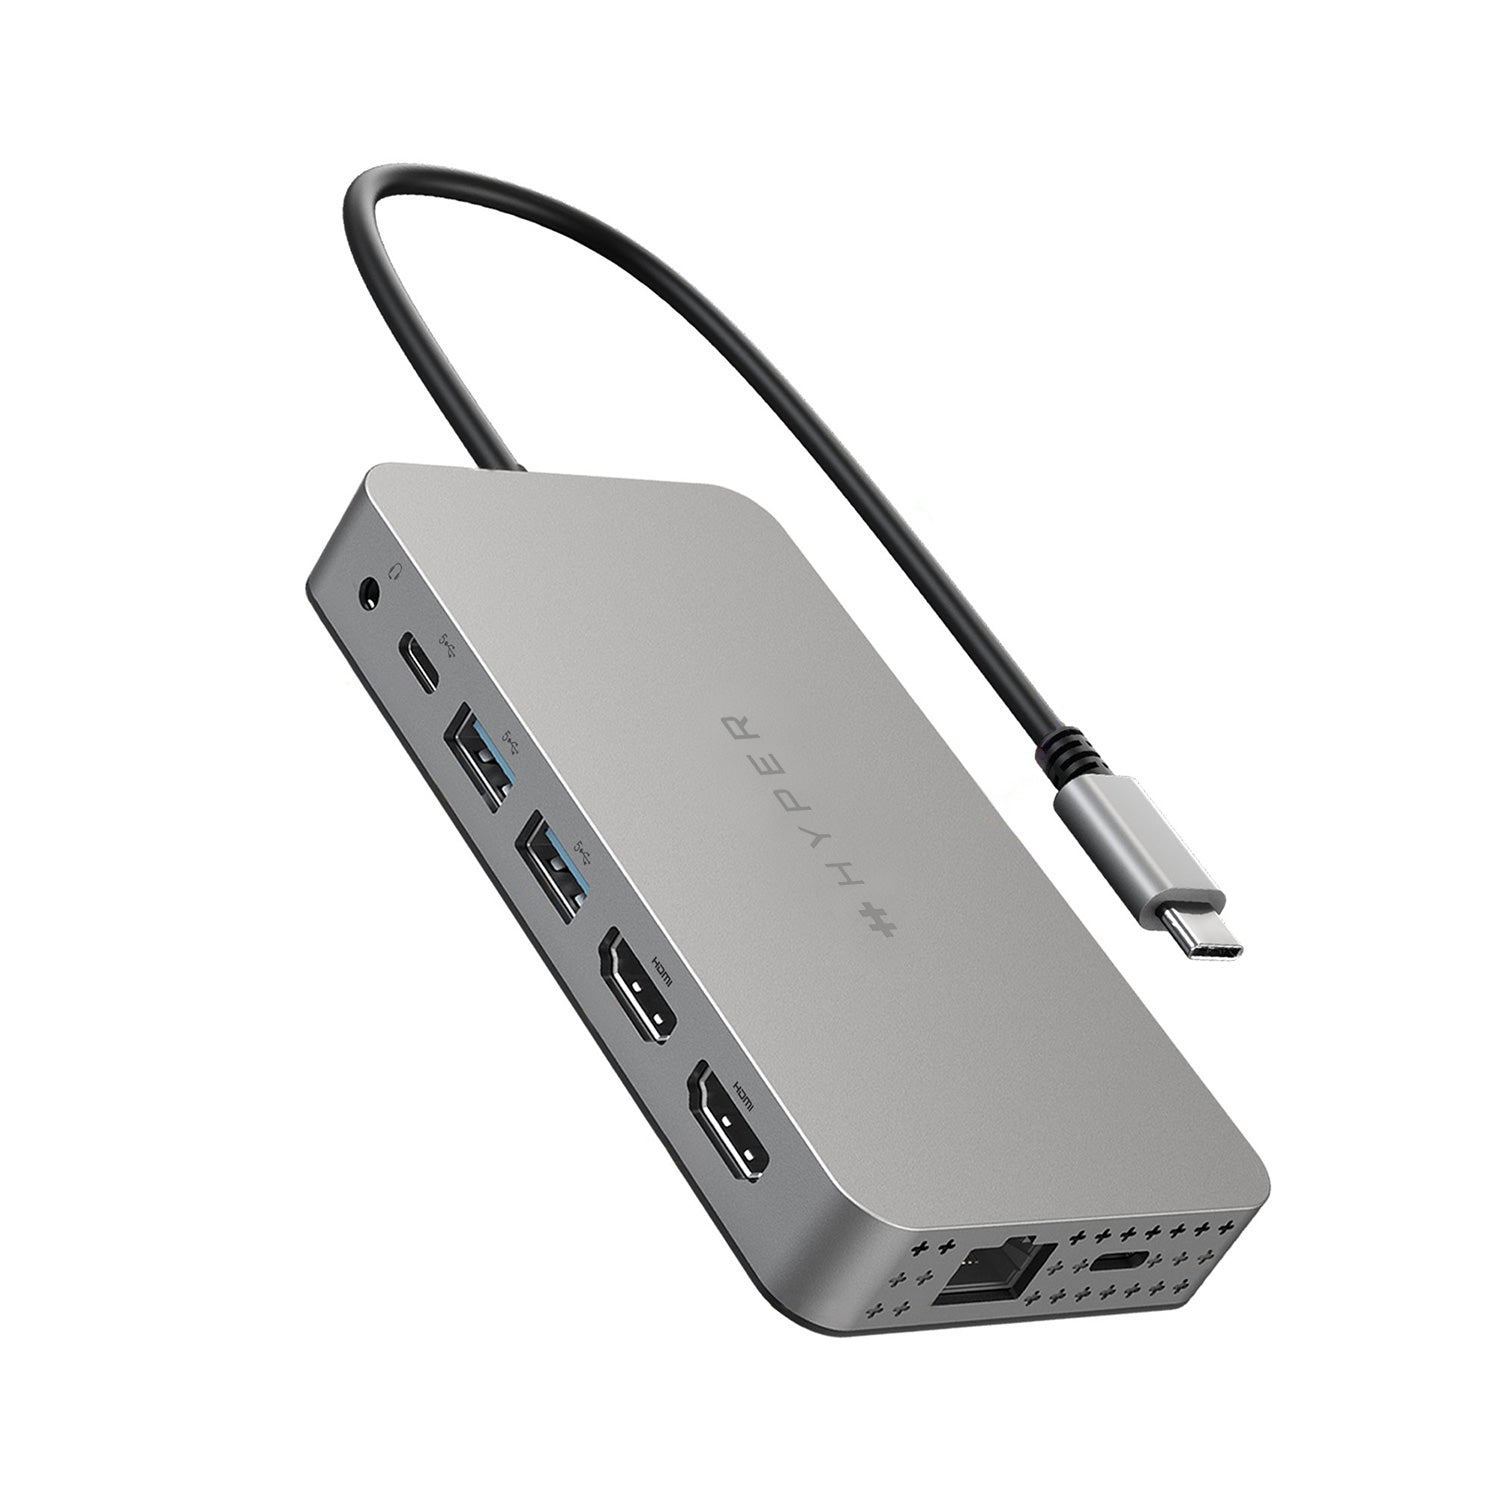 NewQ 11 in 1 USB C ハブ スタンド デュアル HDMI